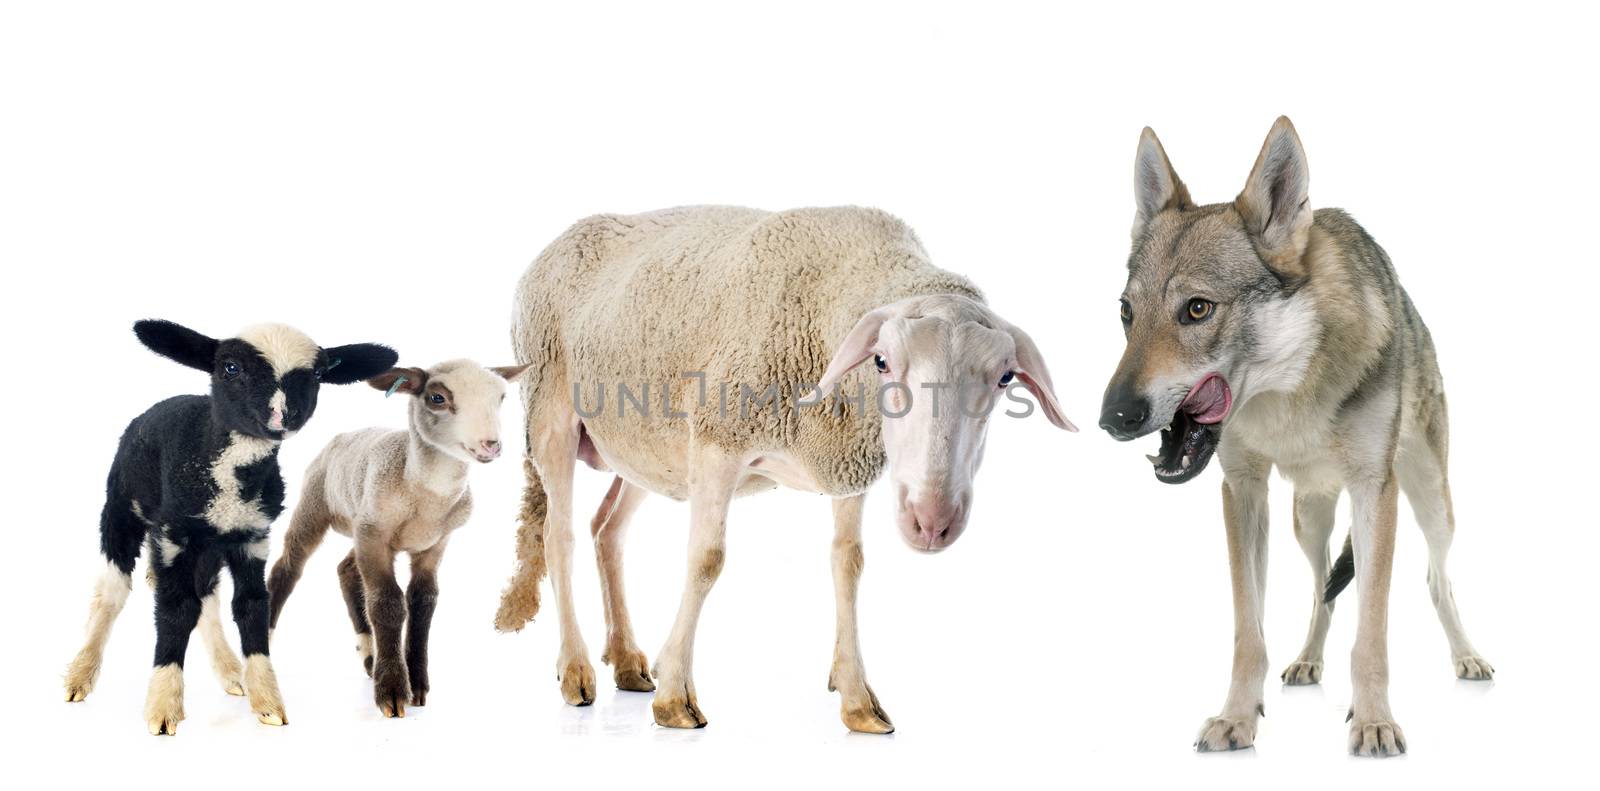 ewe, lambs and wolf by cynoclub